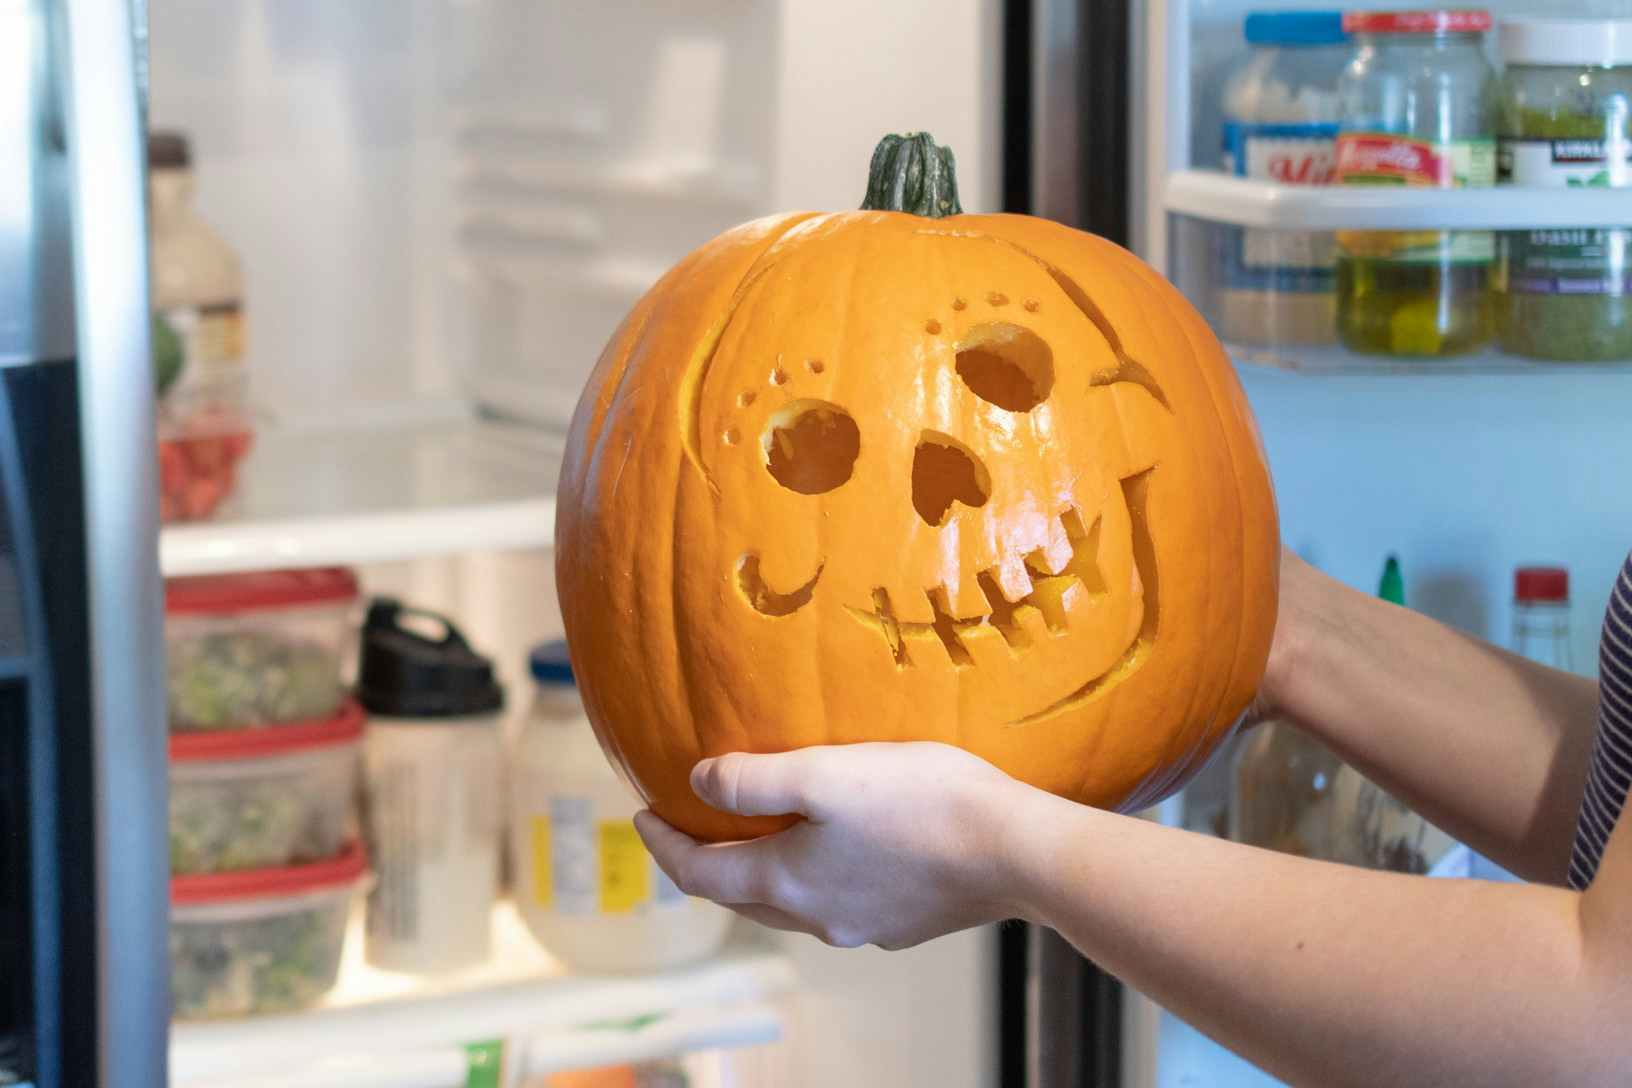 Someone putting a carved pumpkin into a refrigerator